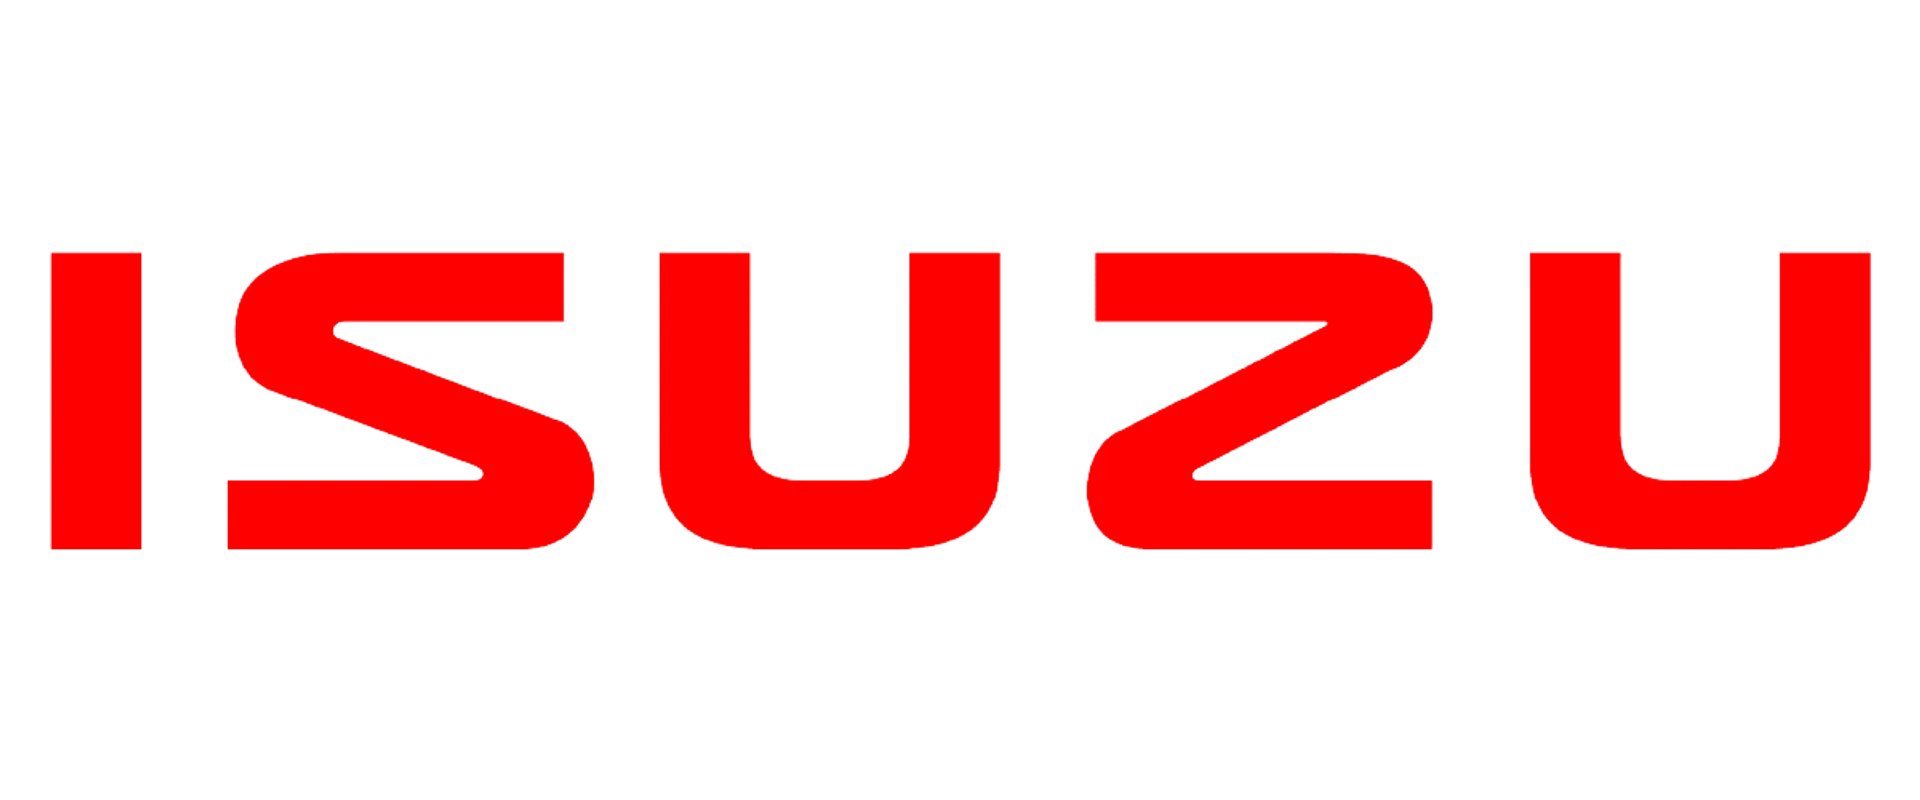 USUZU logo of current catalogue